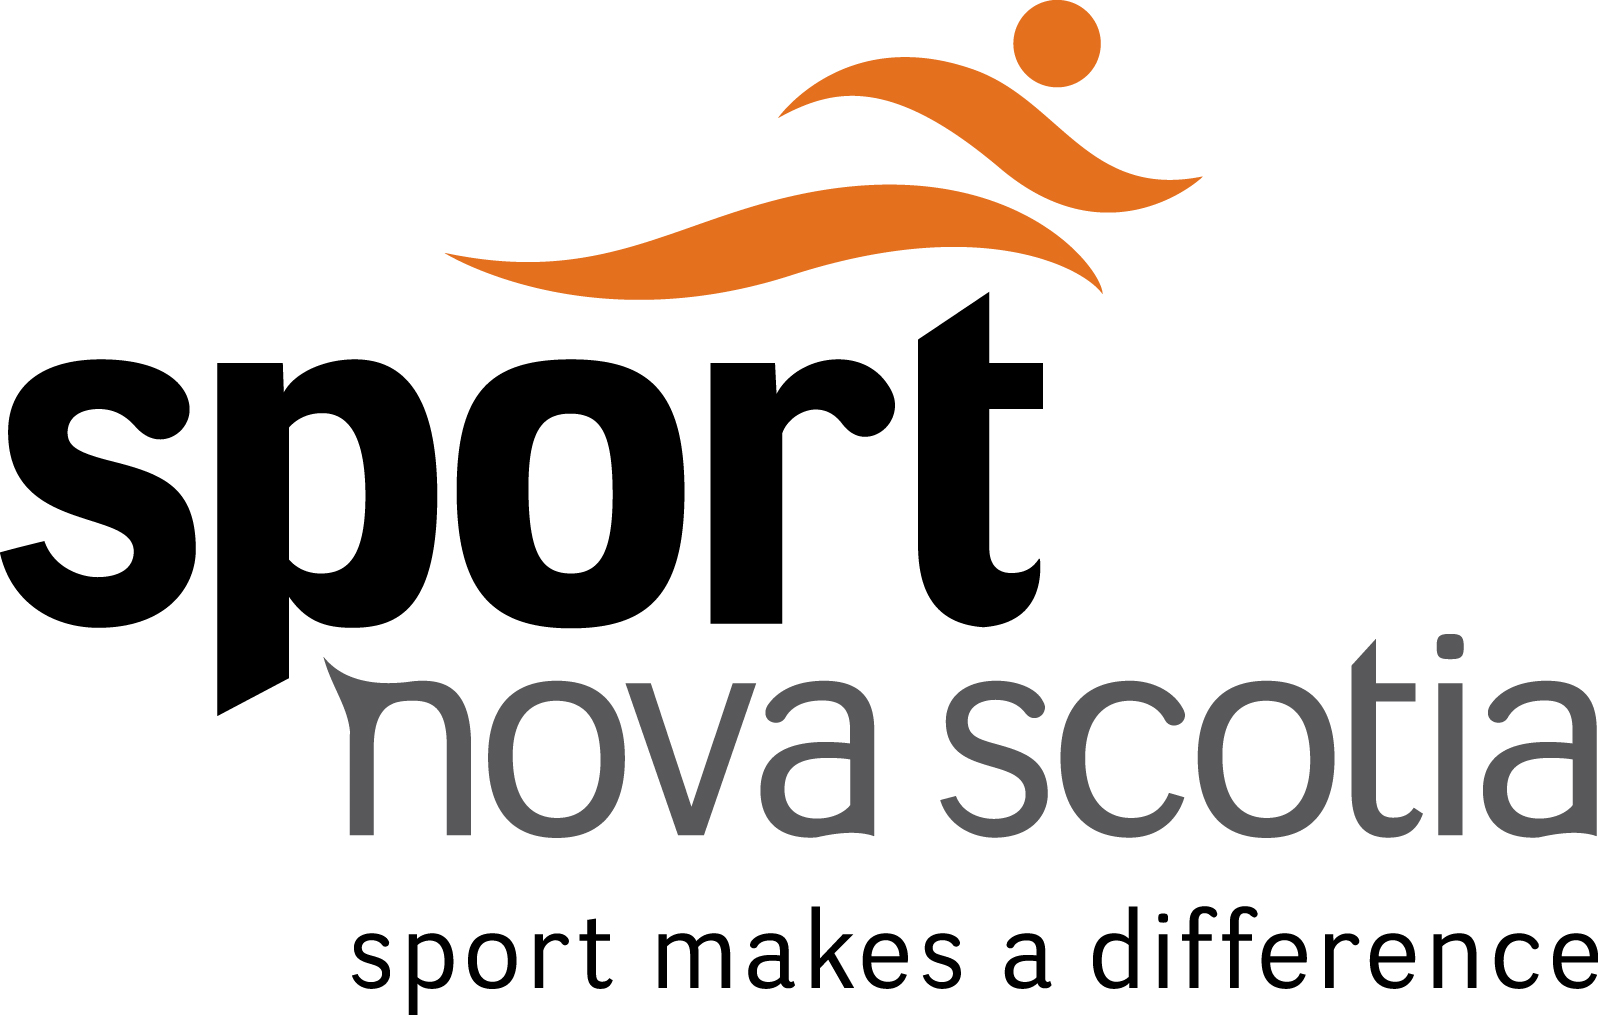 Sport Nova Scotia